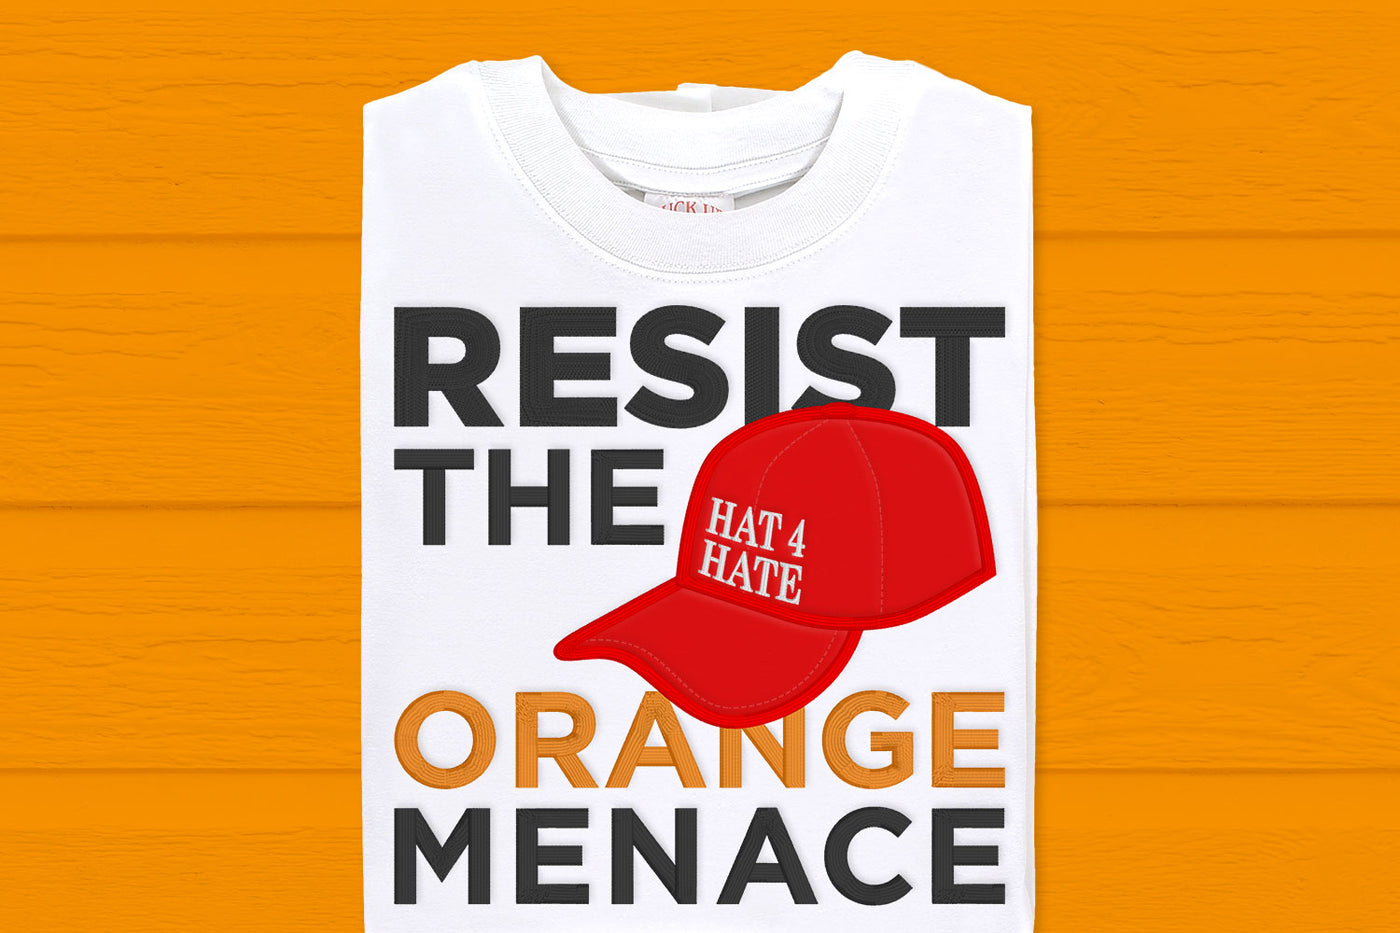 Resist the Orange Menace Anti-Trump Applique Embroidery File